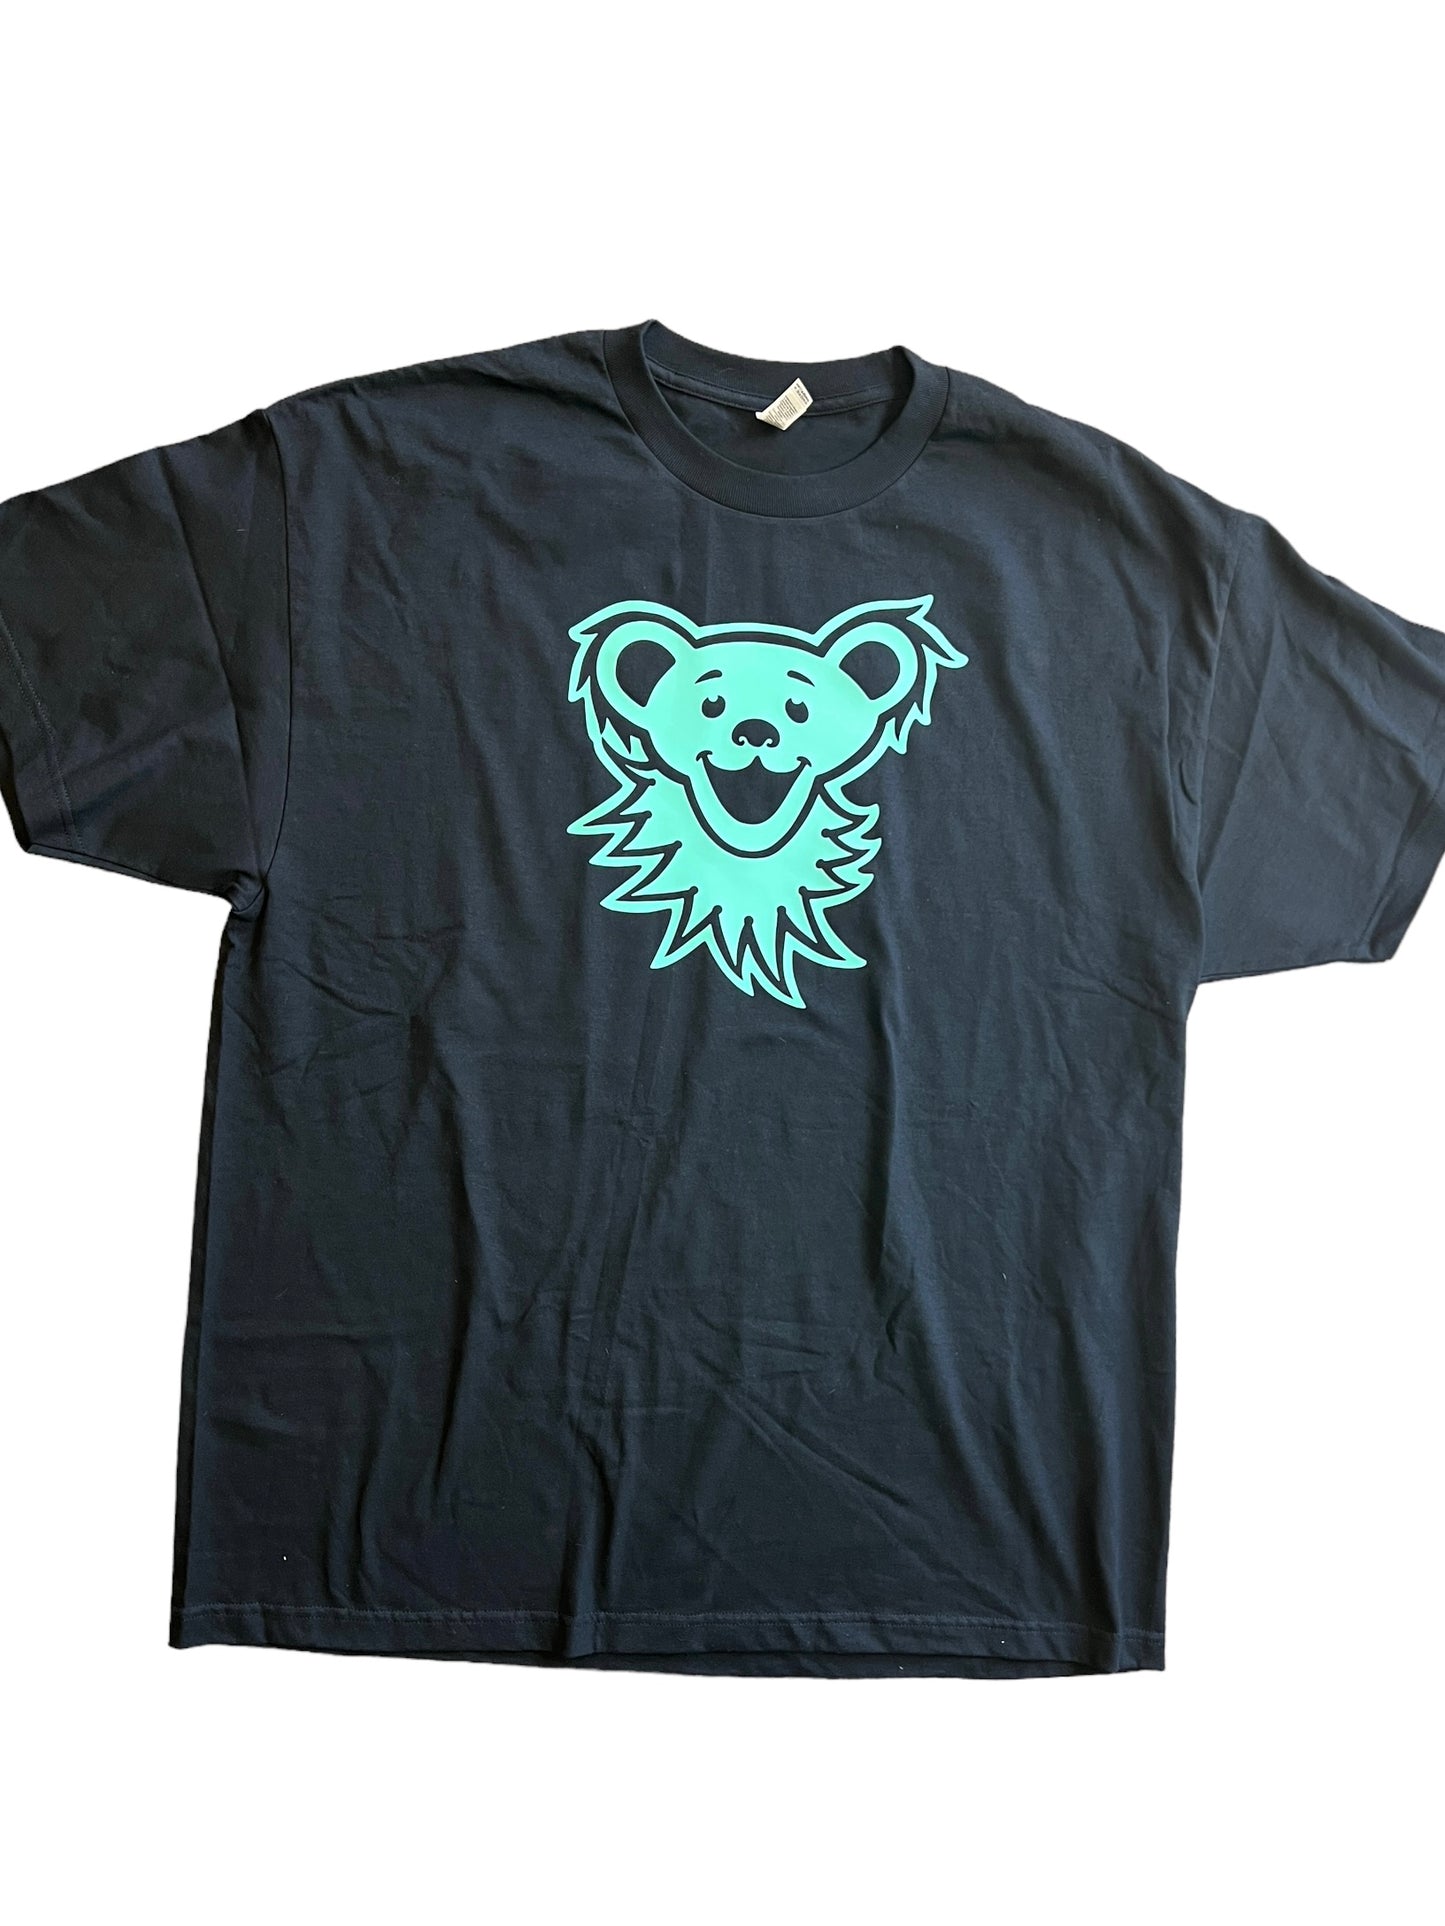 2X One of a kind bear shirt